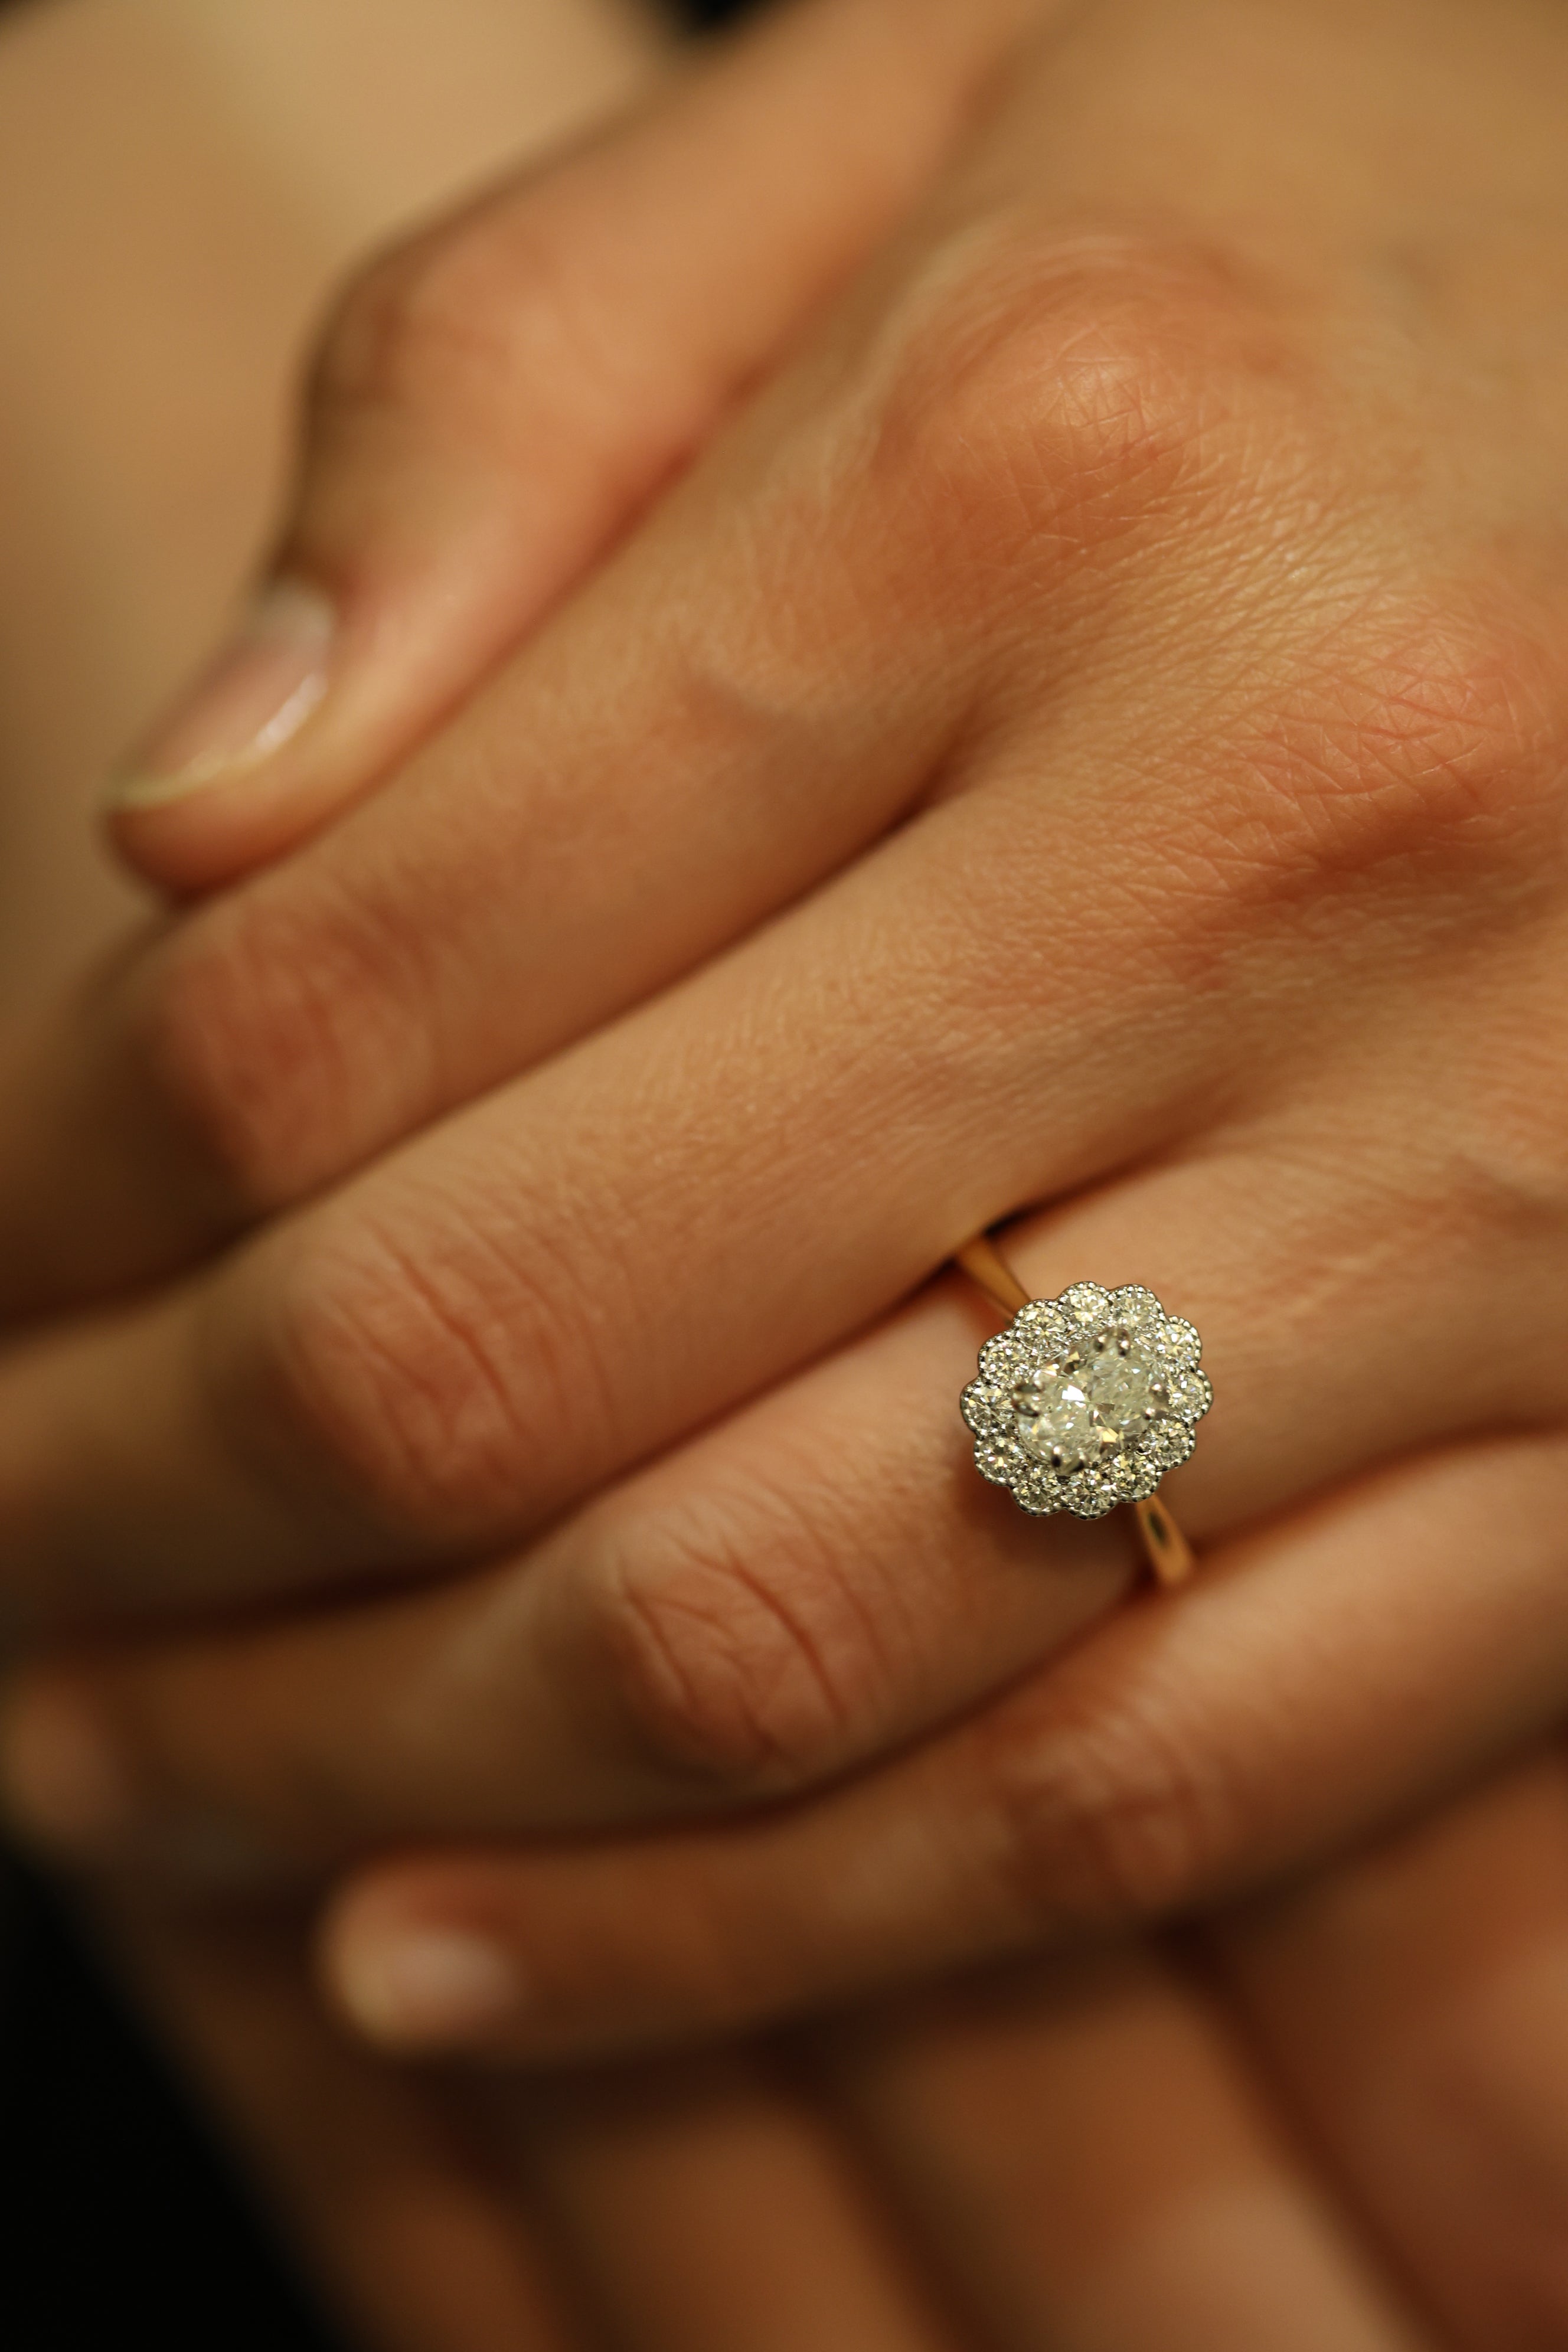 Engagement Rings | Diamond Rings | TACORI Official